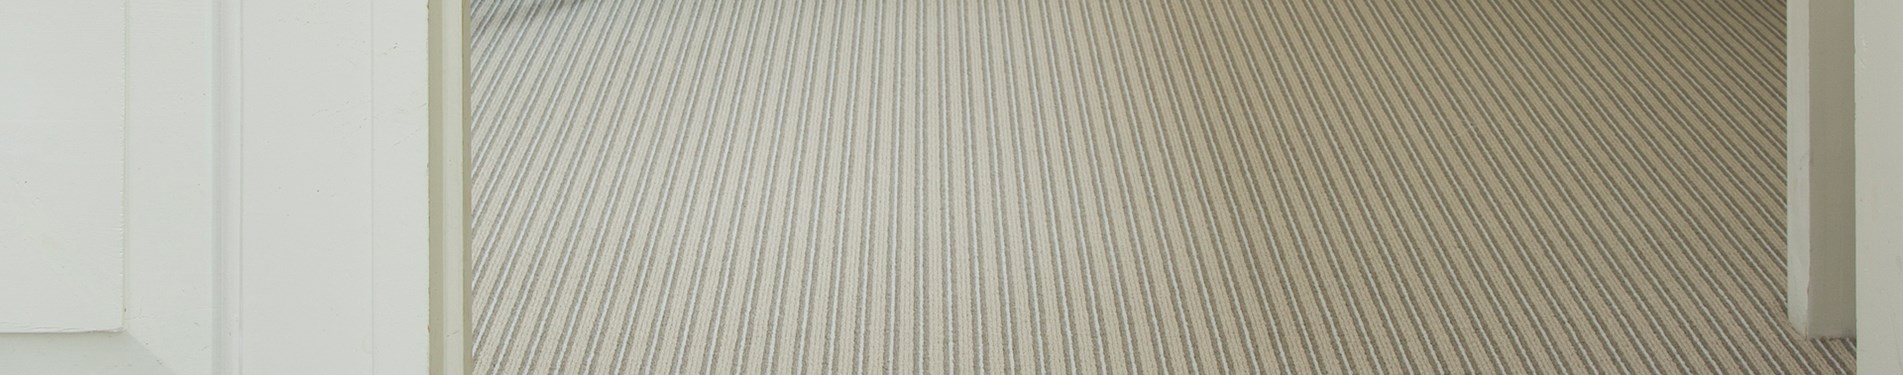 Avebury Stripe Carpet Range